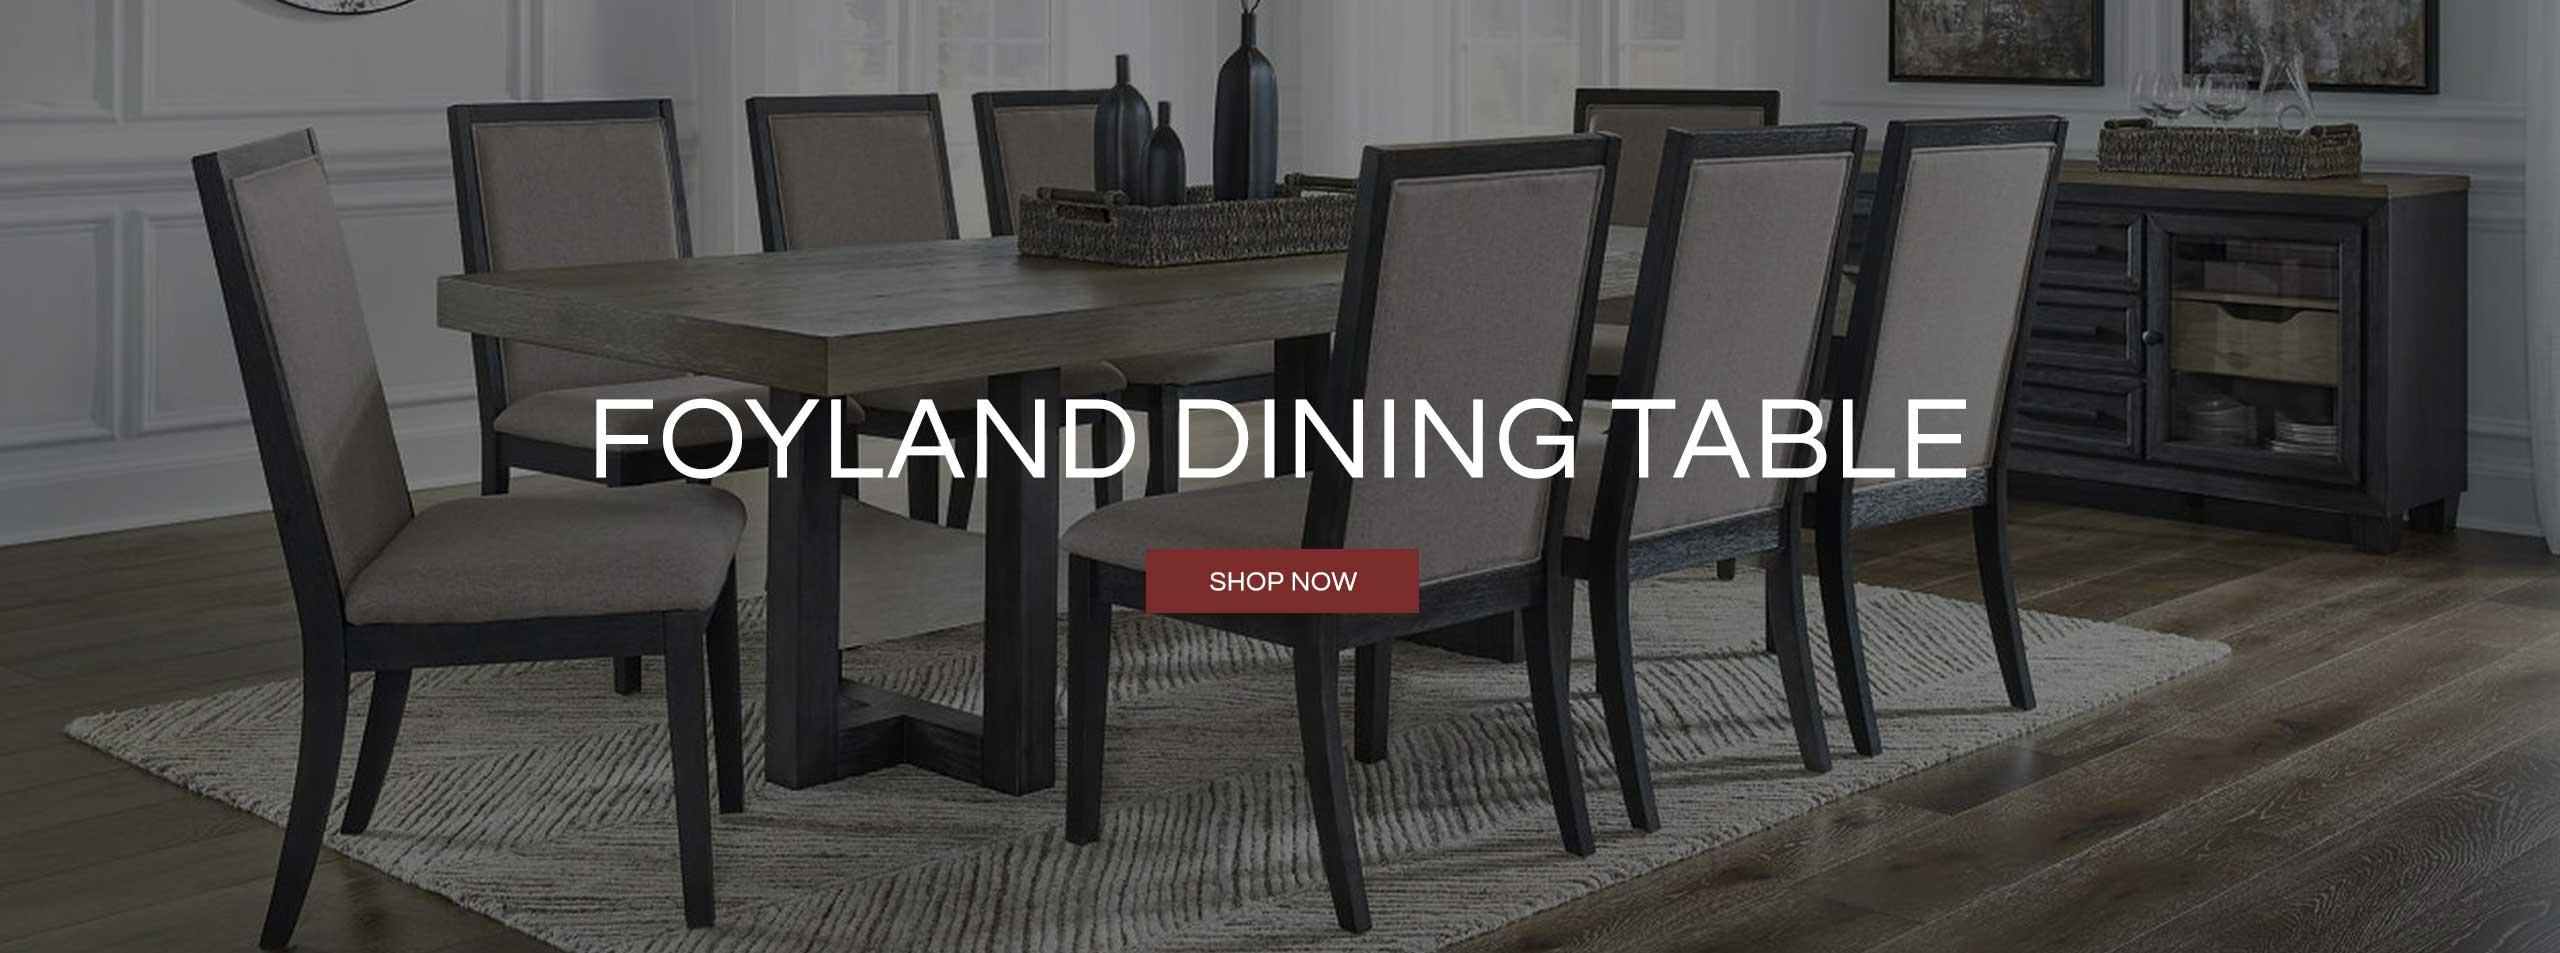 Foyland Dining - Shop Now